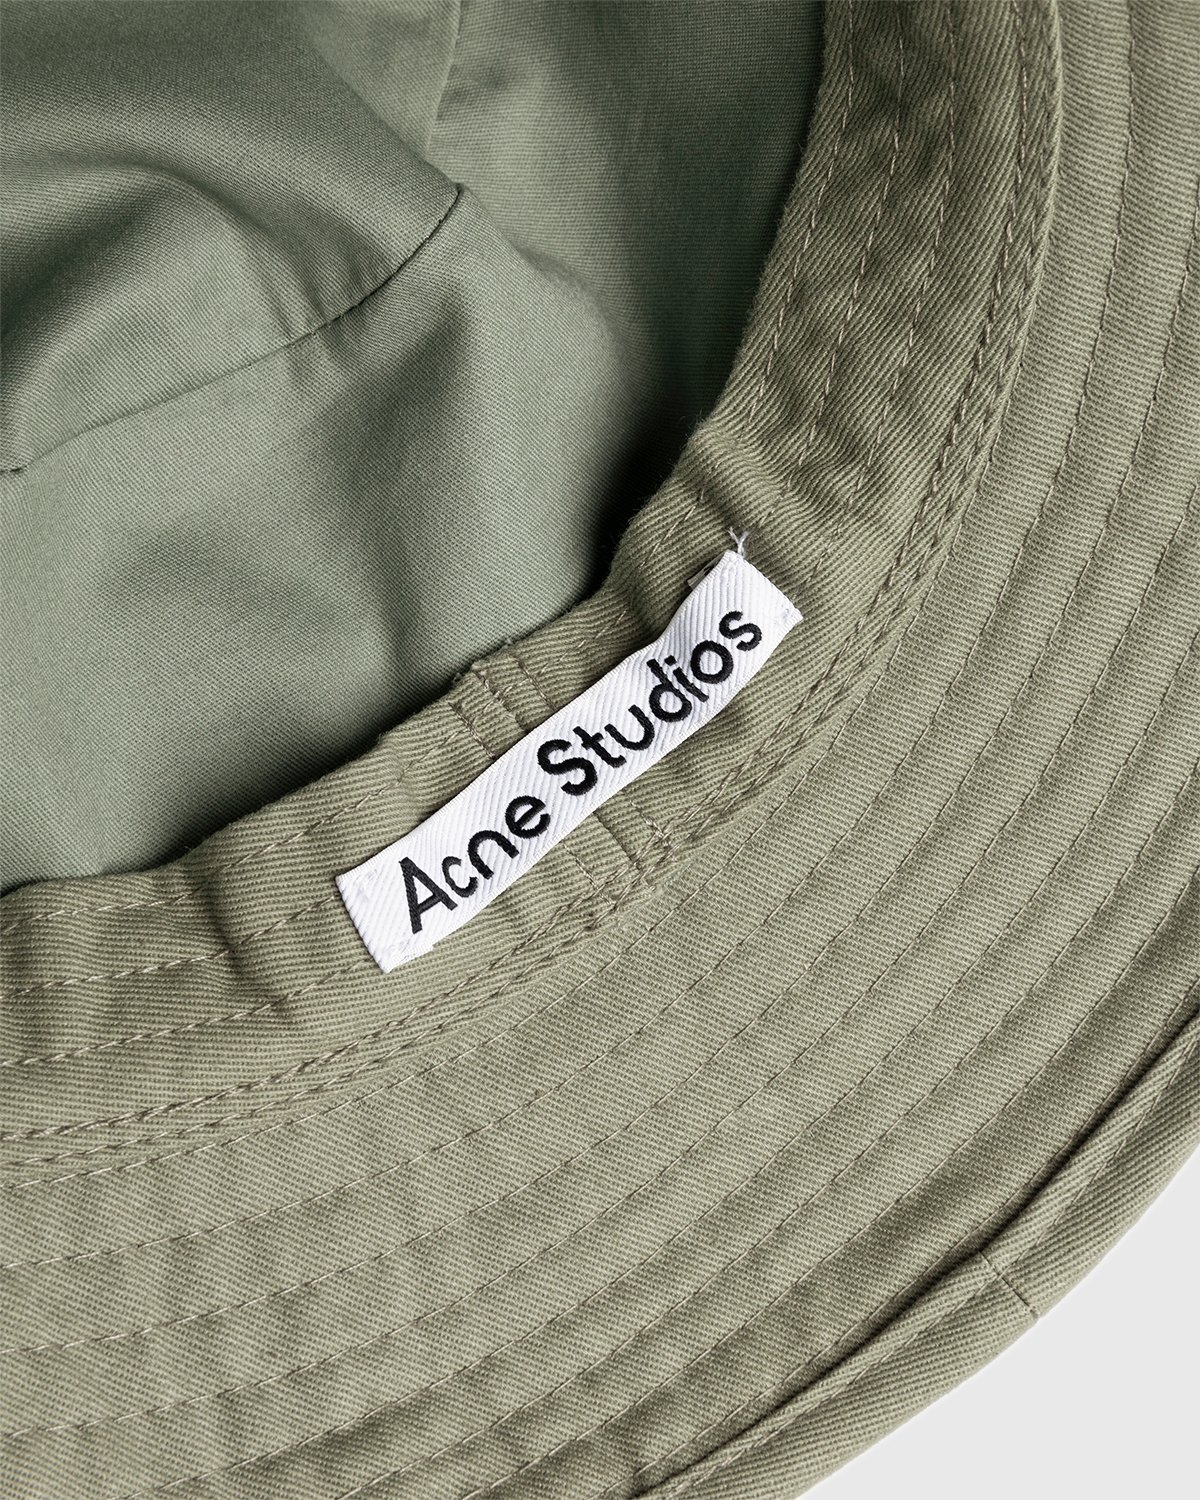 Acne Studios - Twill Bucket Hat Sage Green - Accessories - Green - Image 4